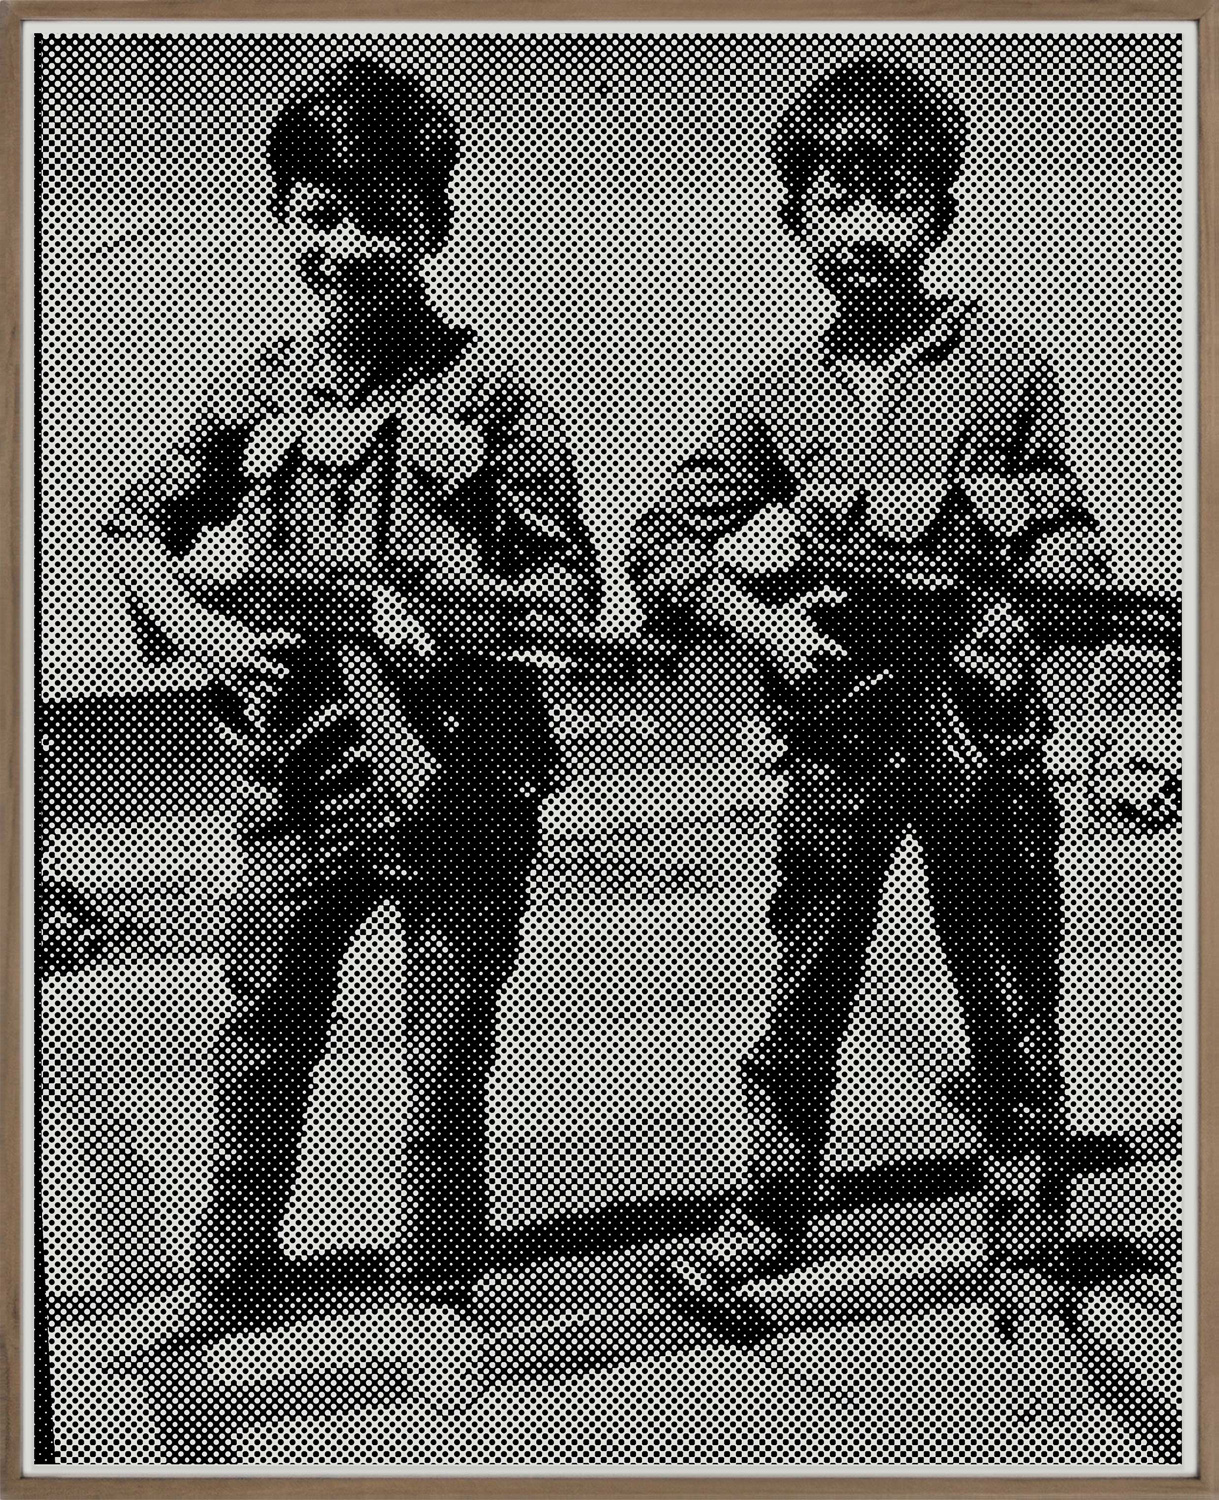 Alex Hanimann - 1968 [Child soldiers of the Dong Rai Regiment, Vietnam], 2018